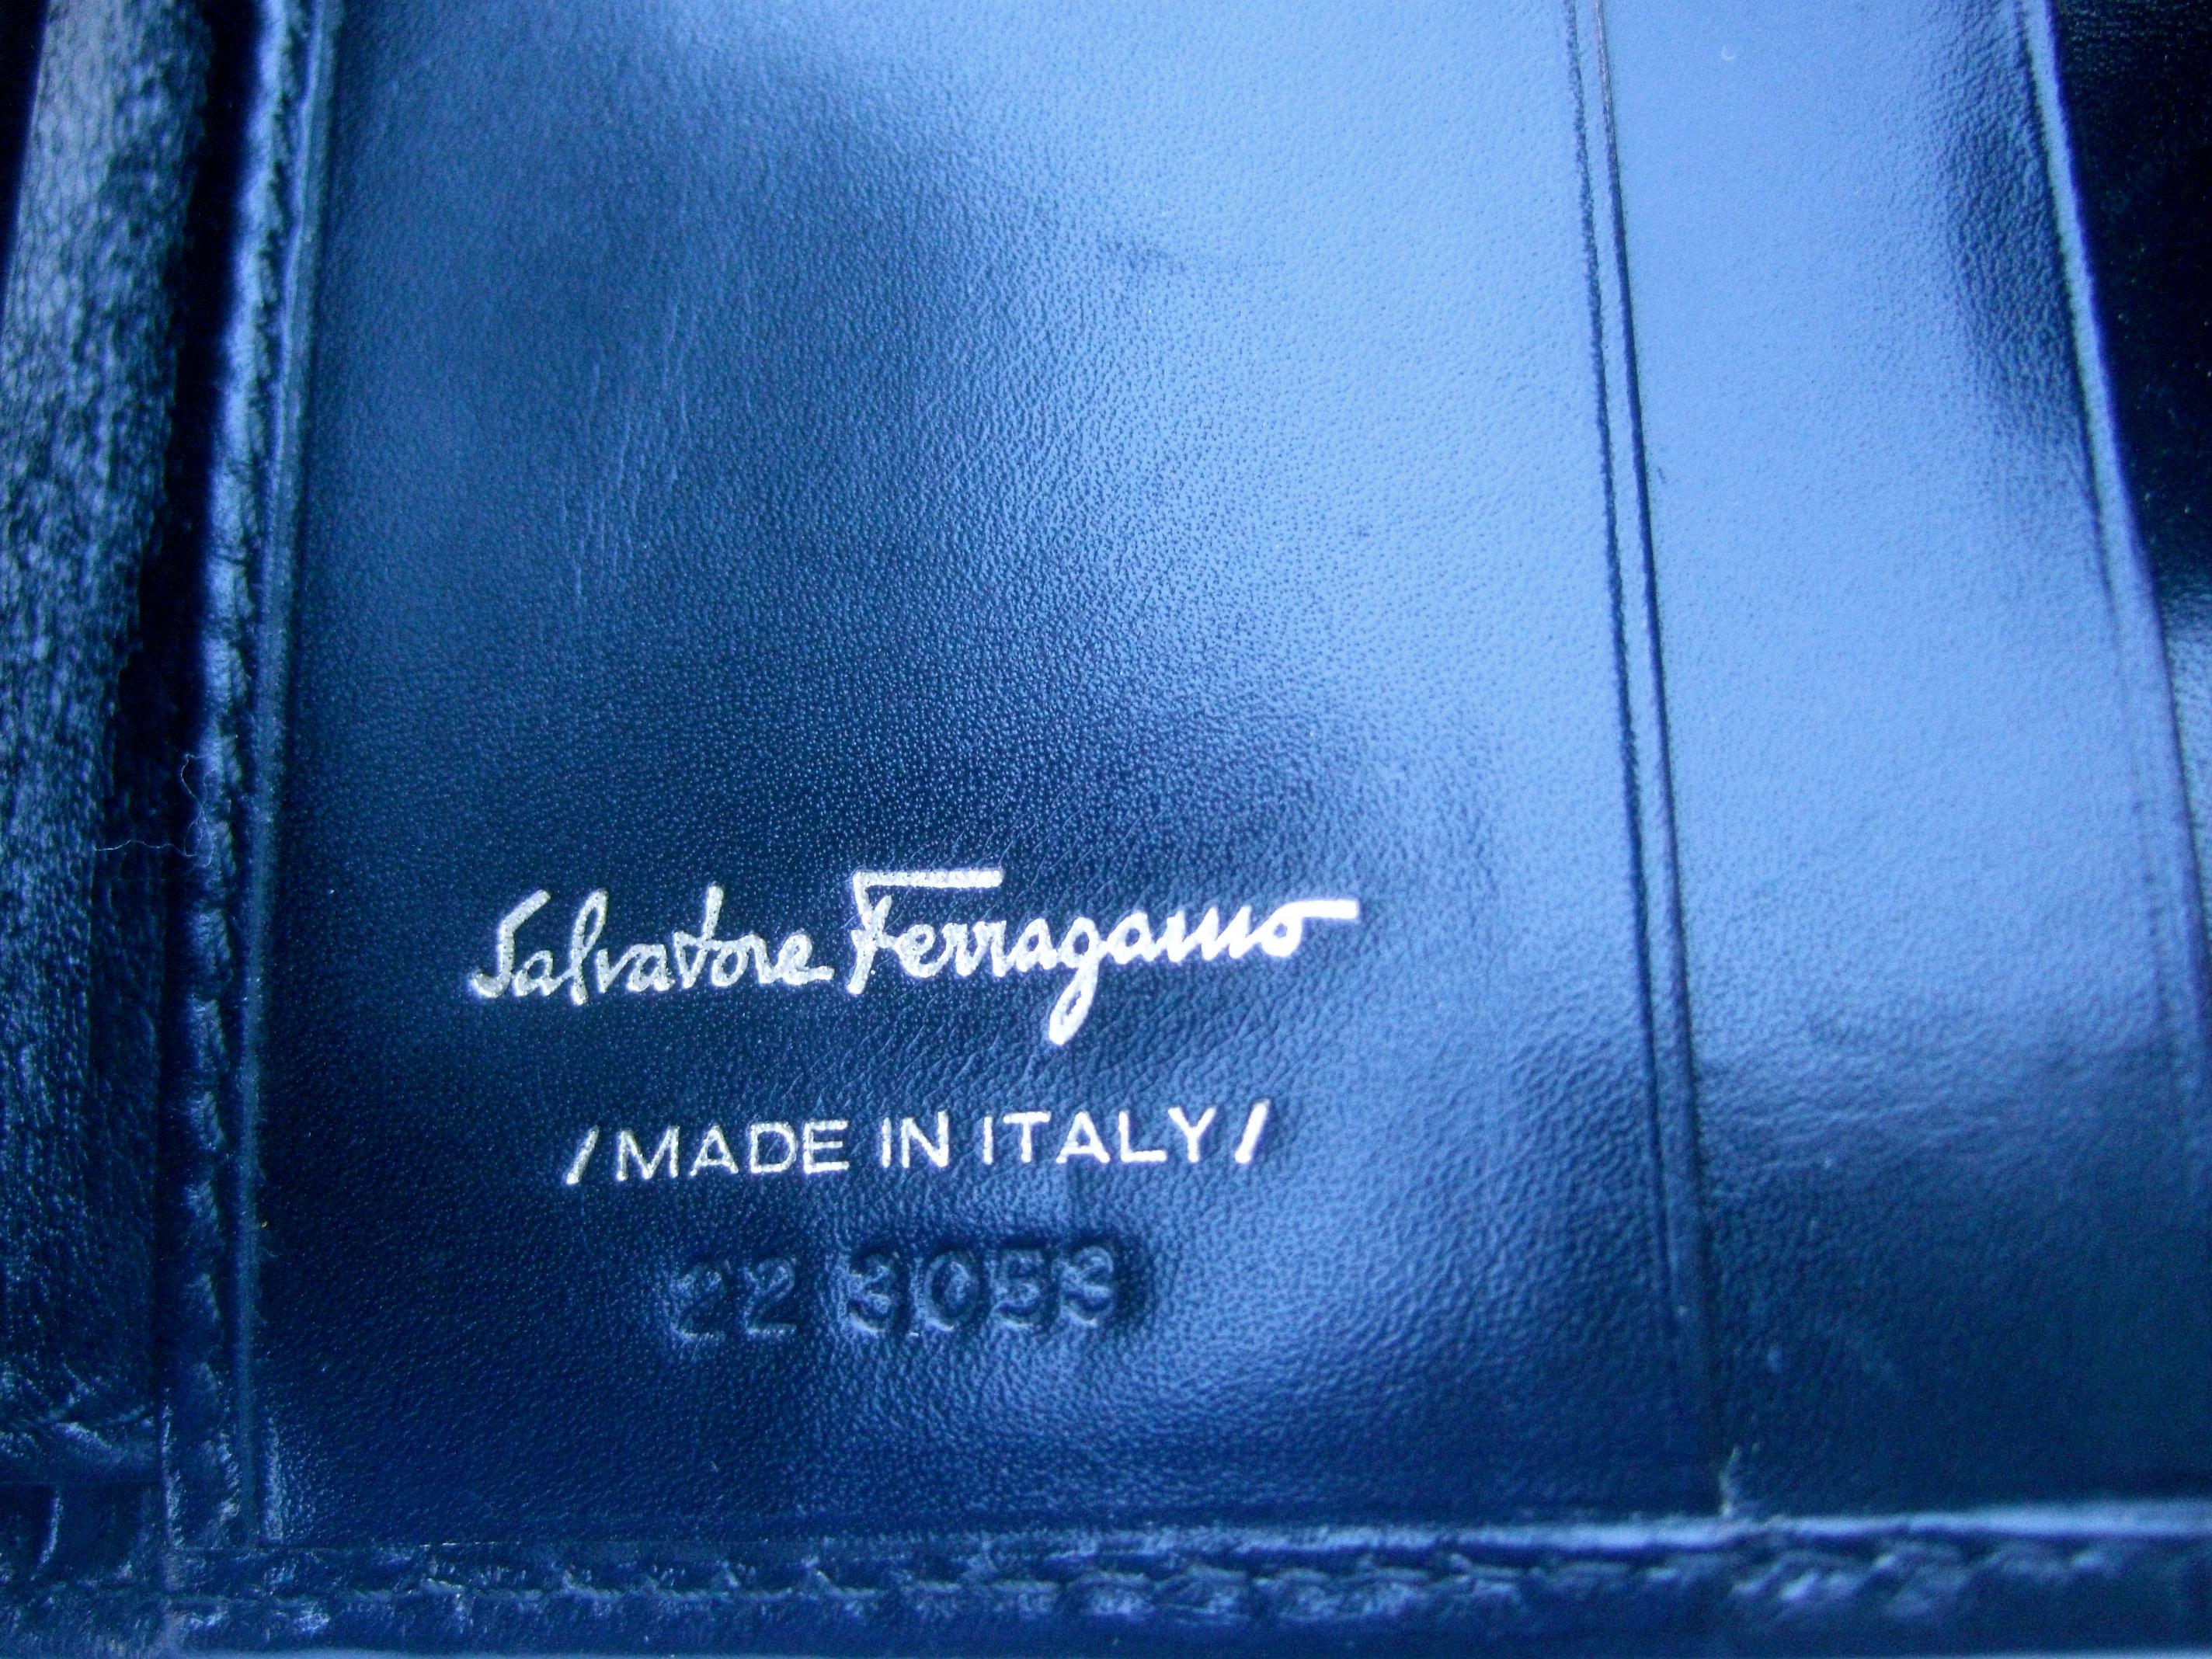 Salvatore Ferragamo Italy Black Leather Ribbon Trim Wallet in Box c 1990s 4